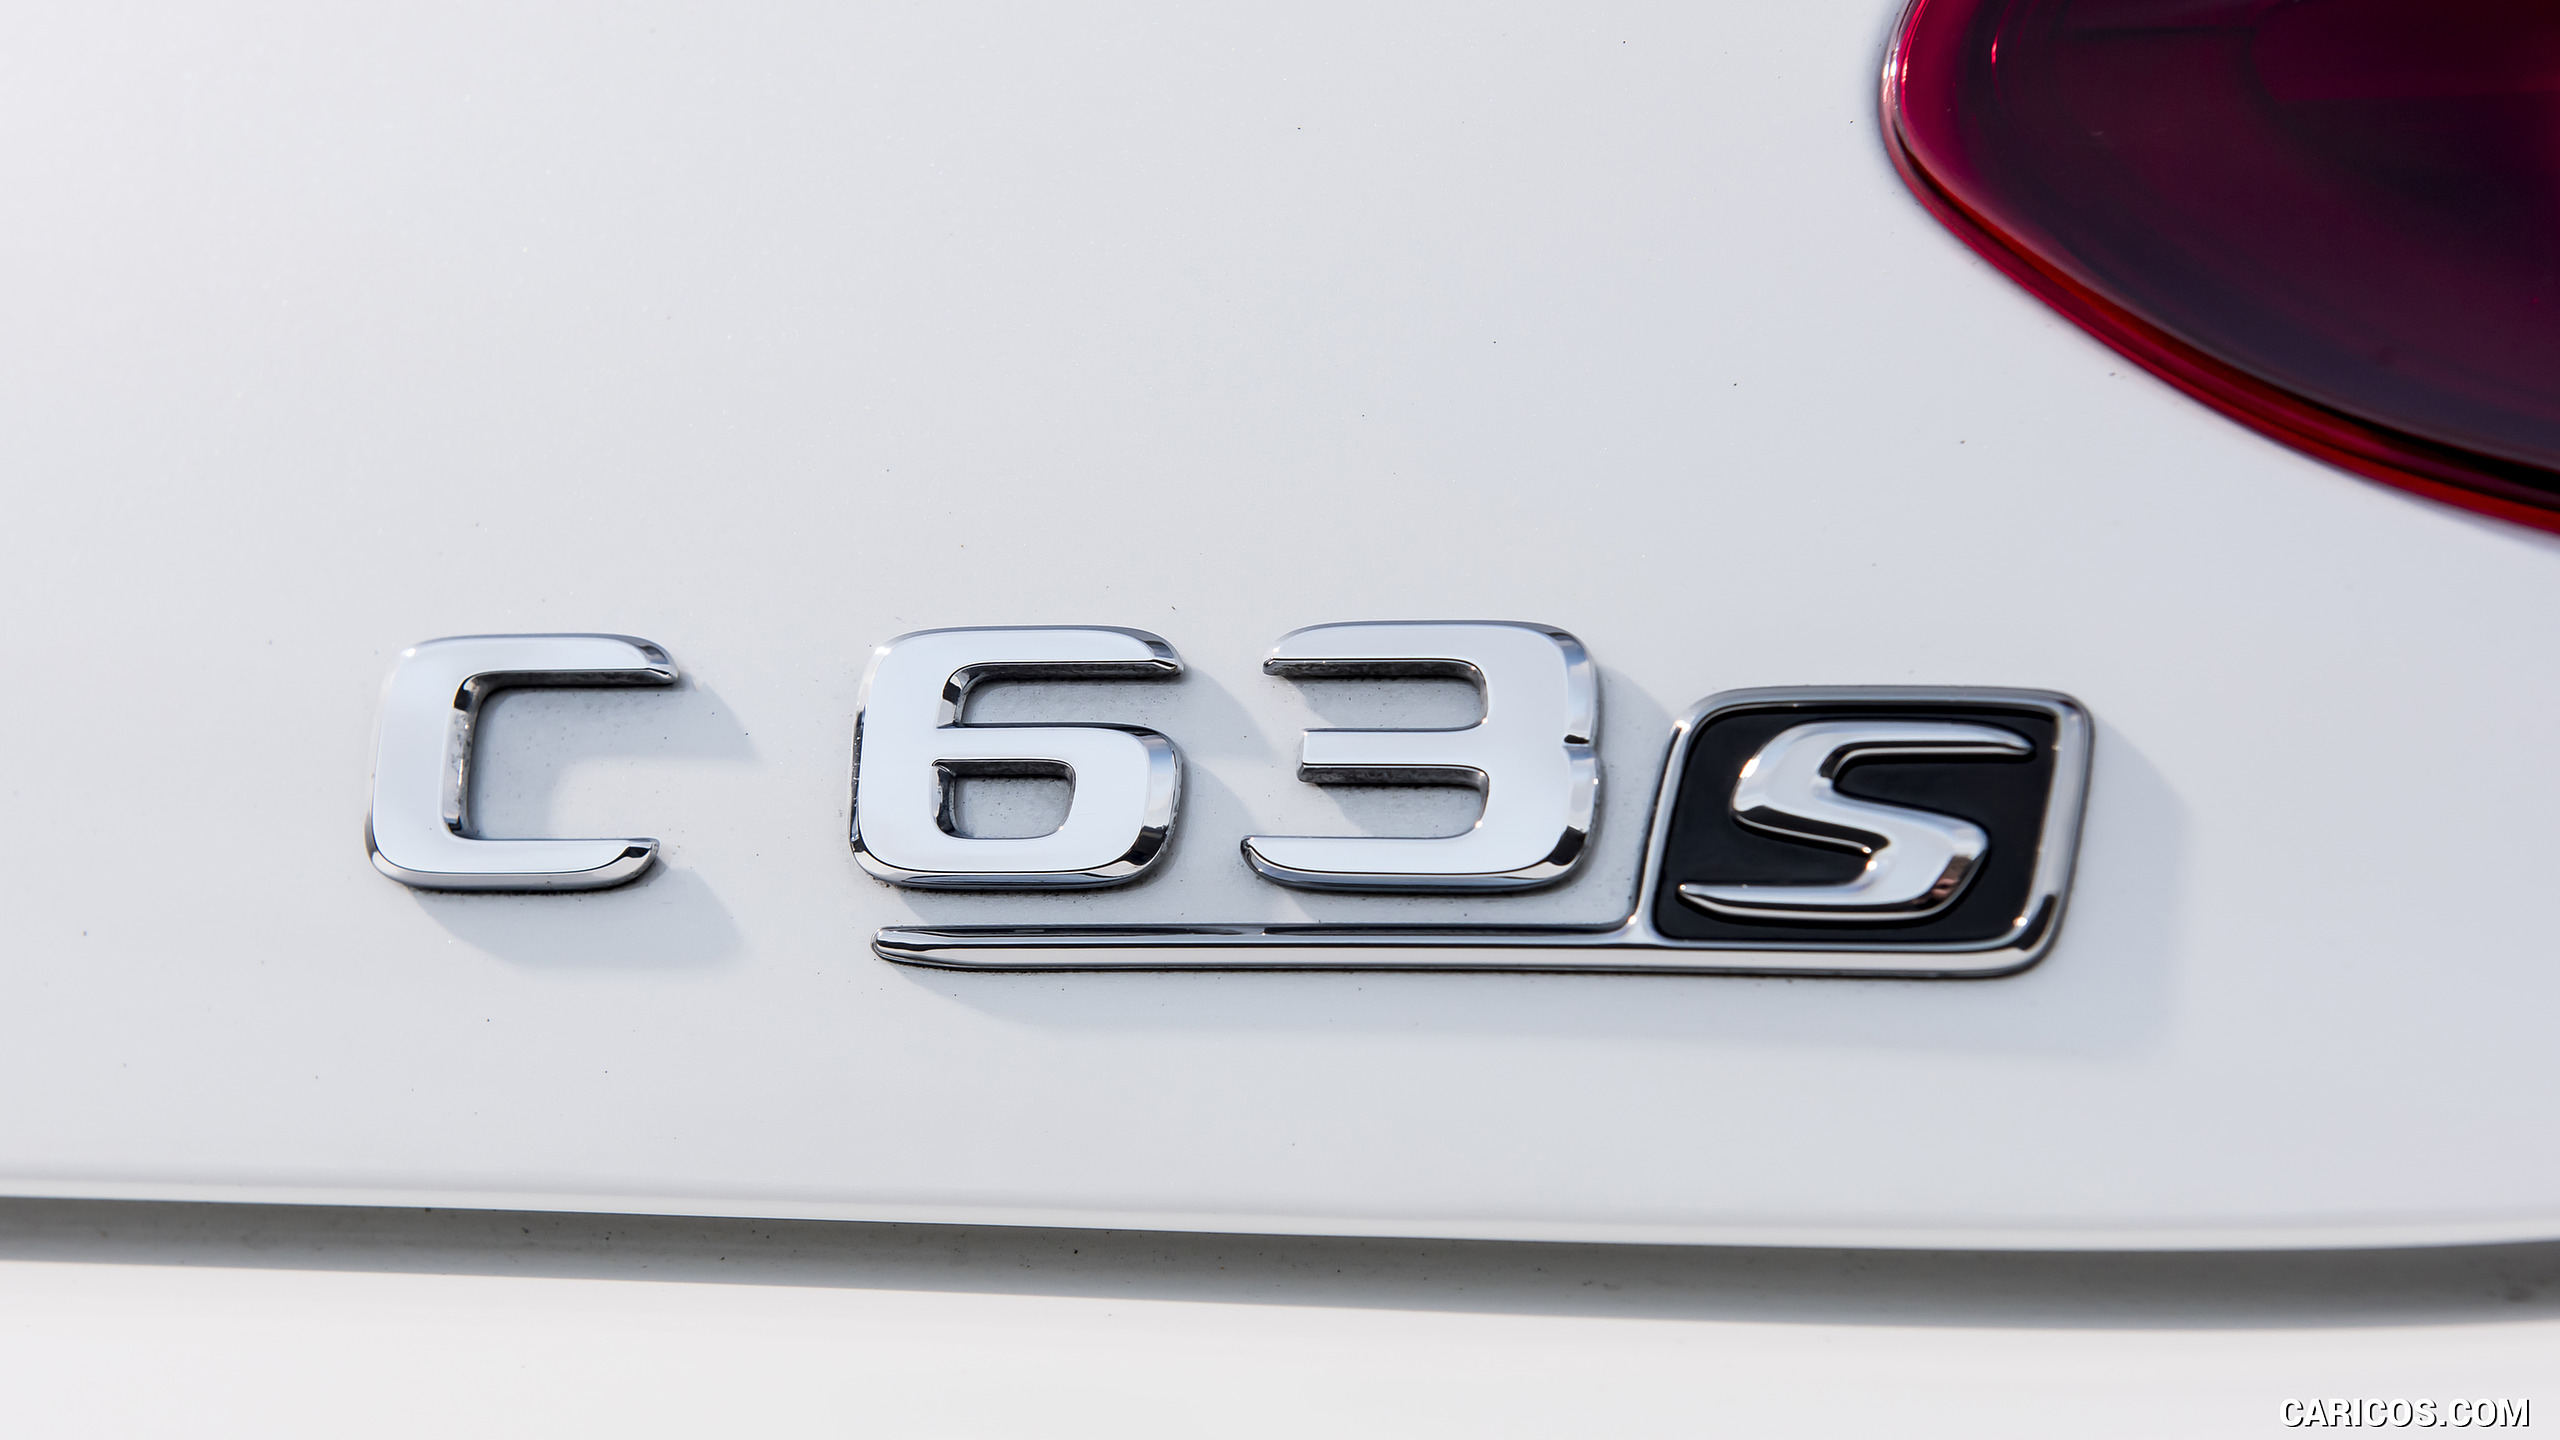 2017 Mercedes-AMG C63 S Cabriolet (UK-Spec) - Badge, #37 of 50